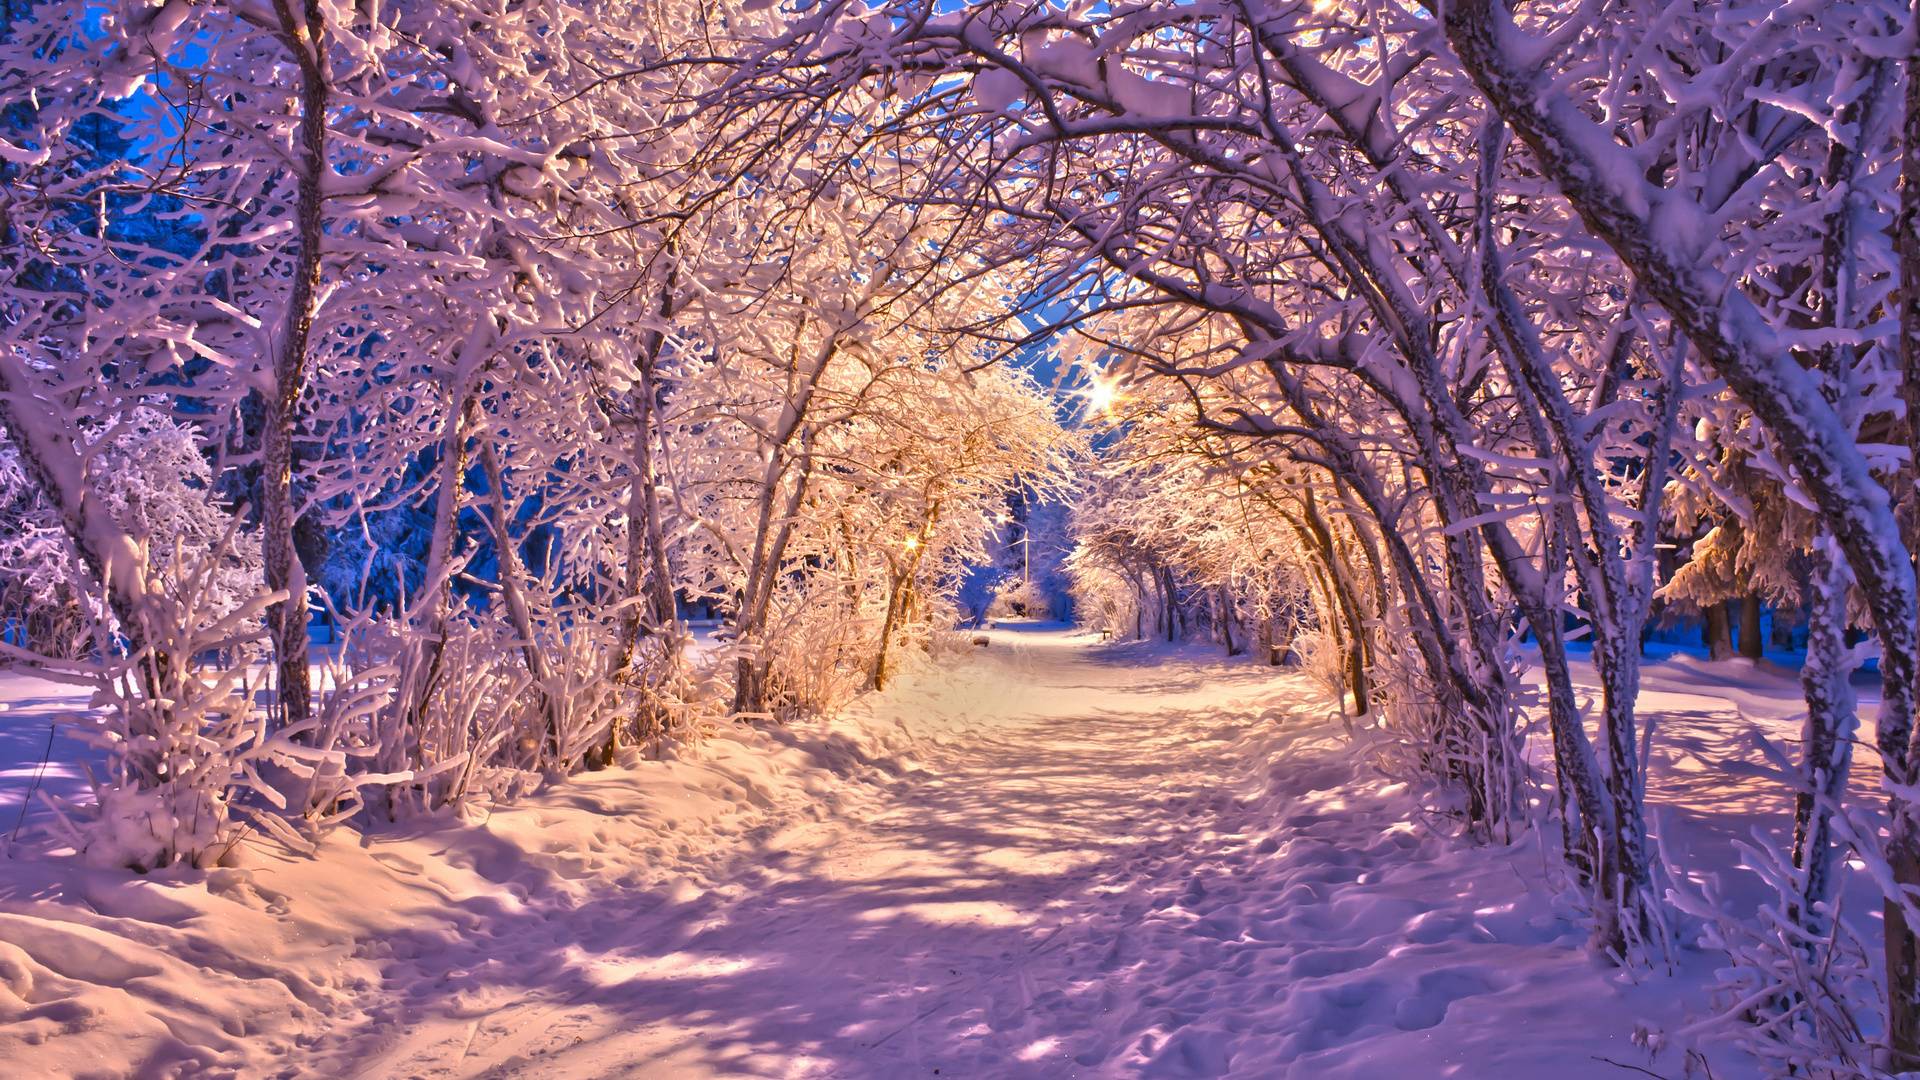 Amazing Snowed Forest Winter Wallpaper, iPhone Wallpaper, Facebook